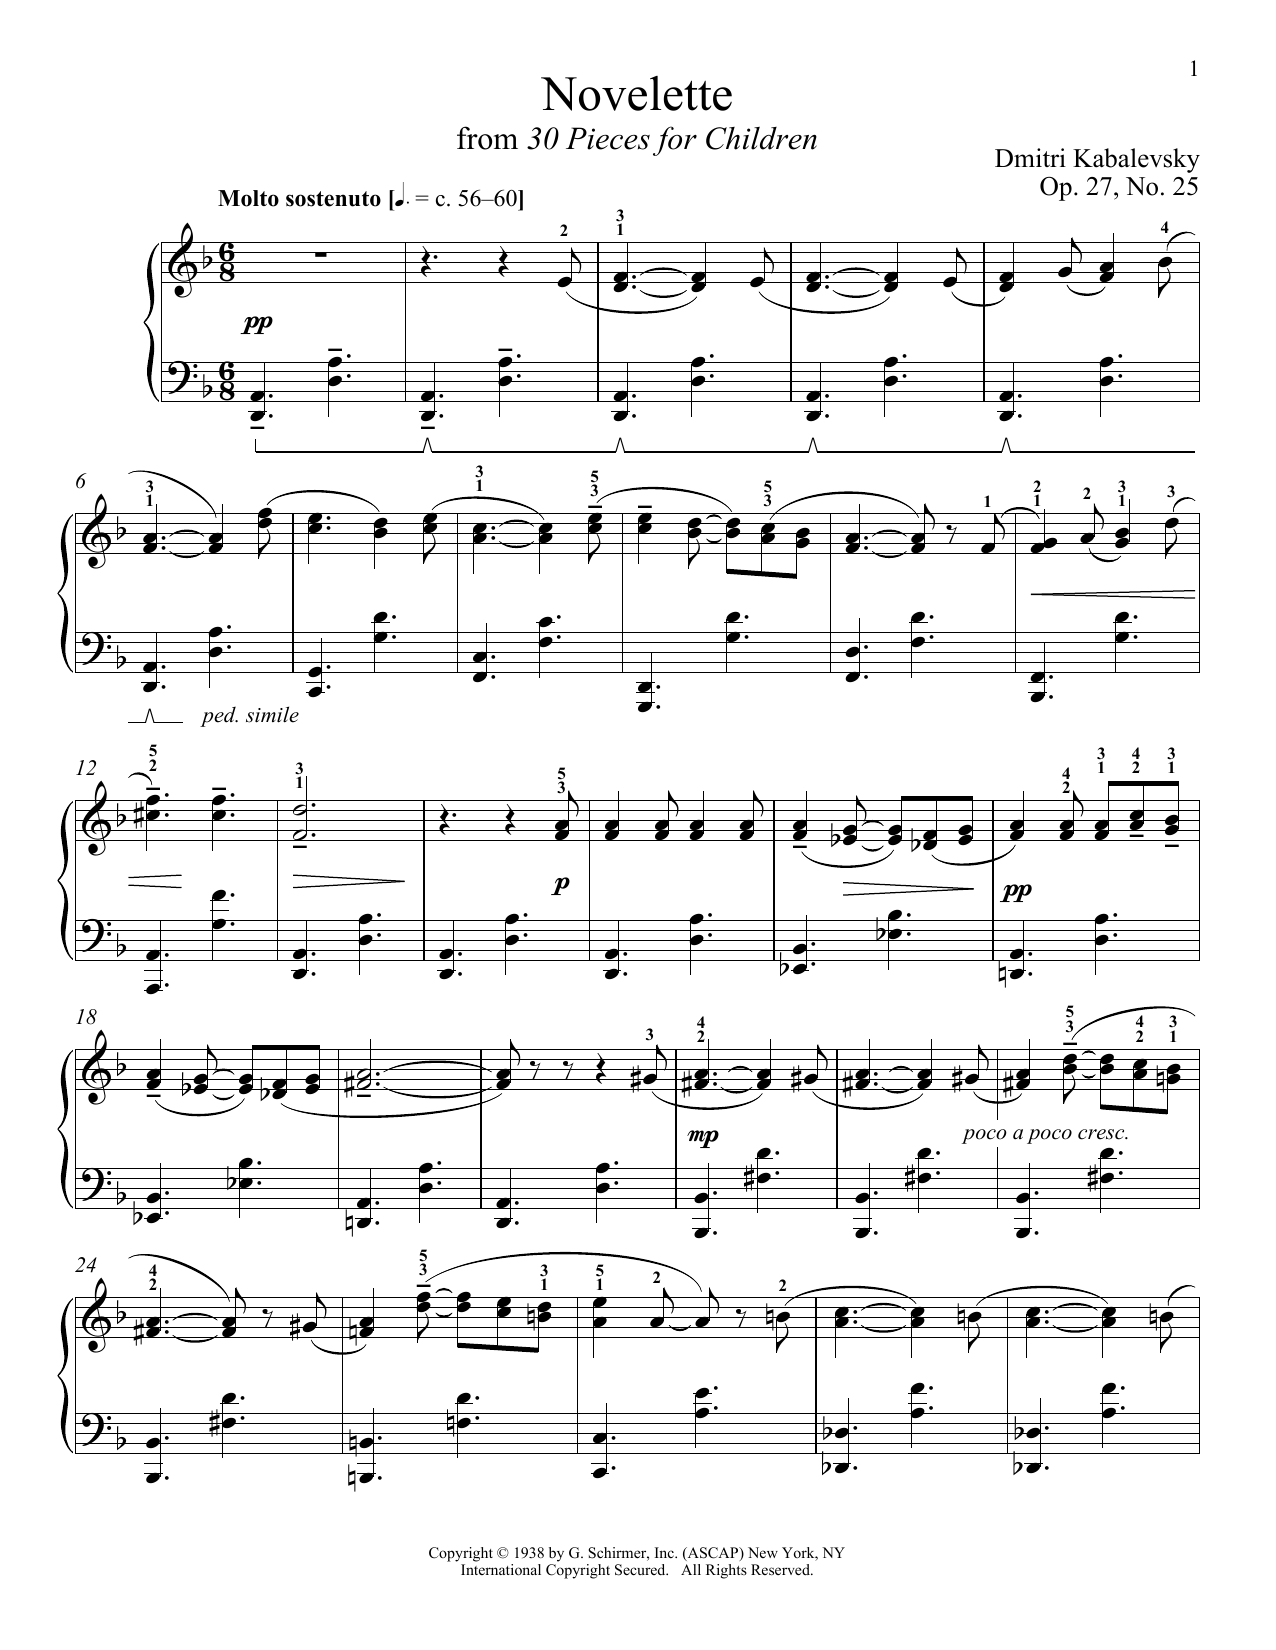 Dmitri Kabalevsky Novelette Sheet Music Notes & Chords for Piano - Download or Print PDF